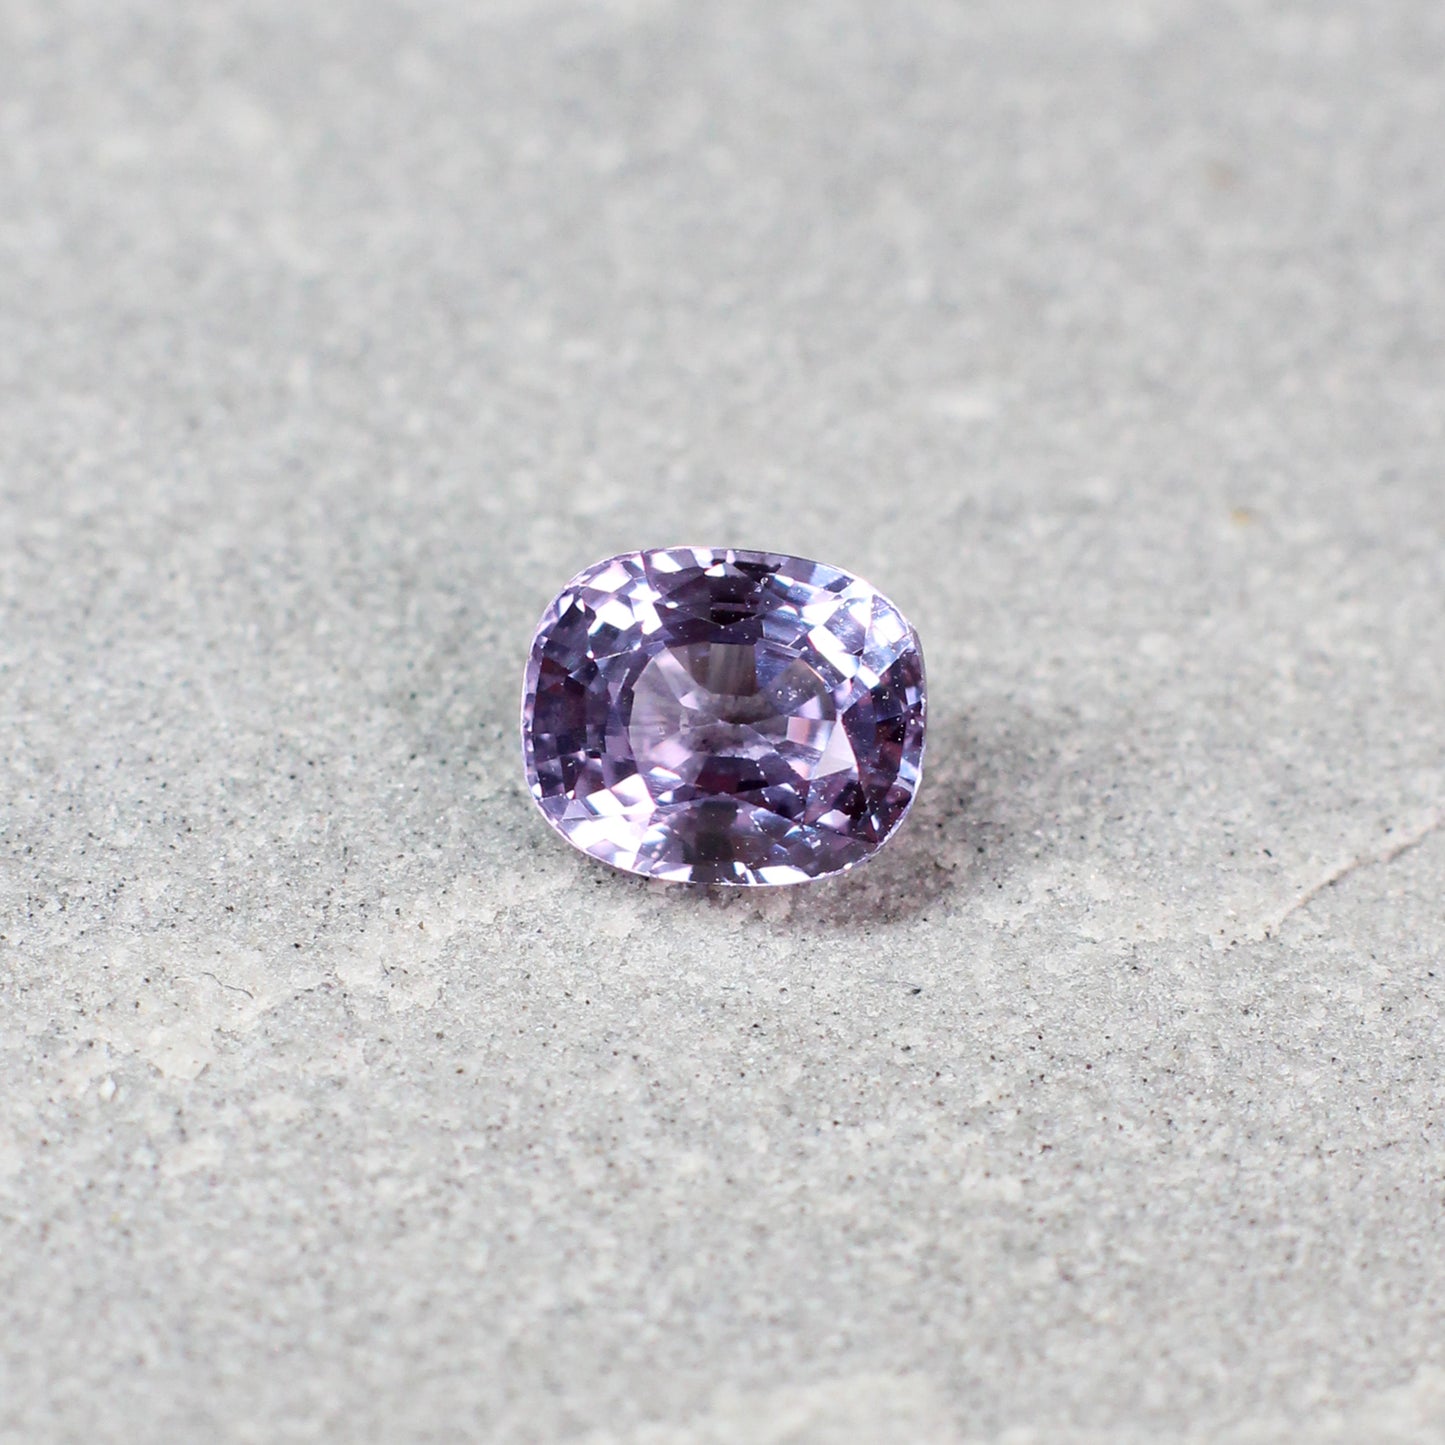 1.27ct Purple, Cushion Sapphire, Heated, Madagascar - 6.38 x 5.31 x 3.83mm